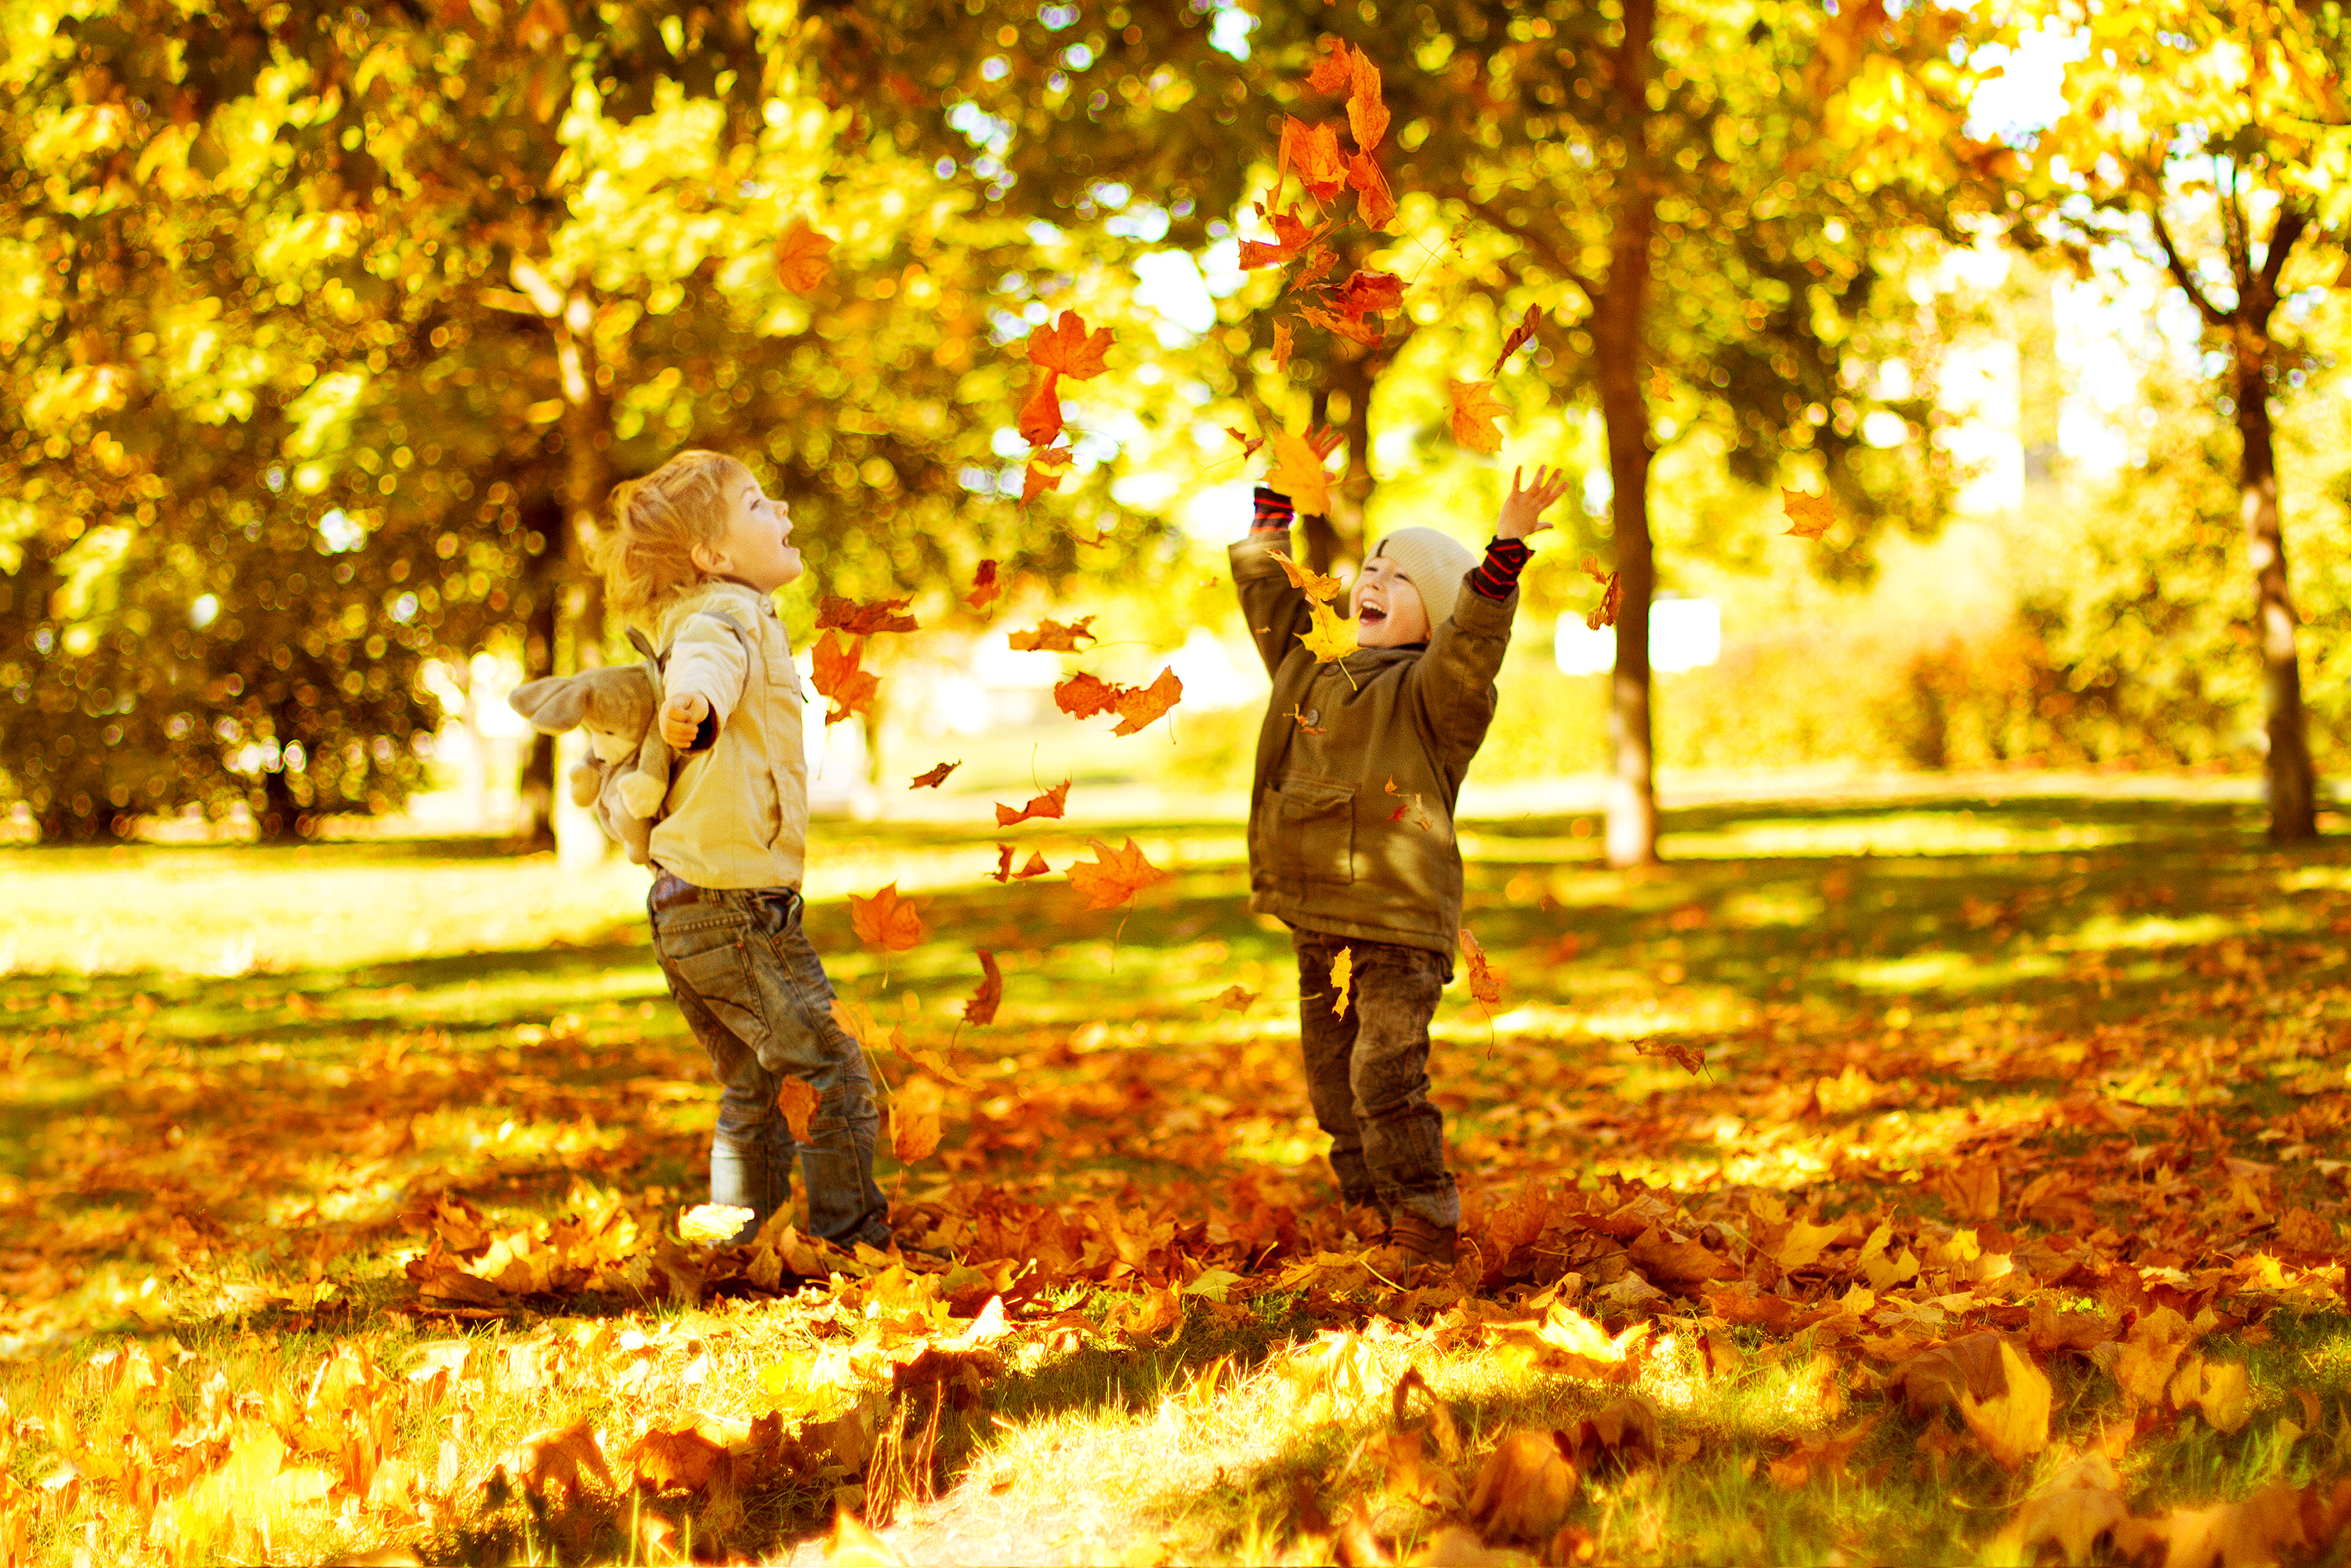 Déguisements en feuilles d'automne, Copyright (c) 2012 Inara Prusakova/Shutterstock.  No use without permission.